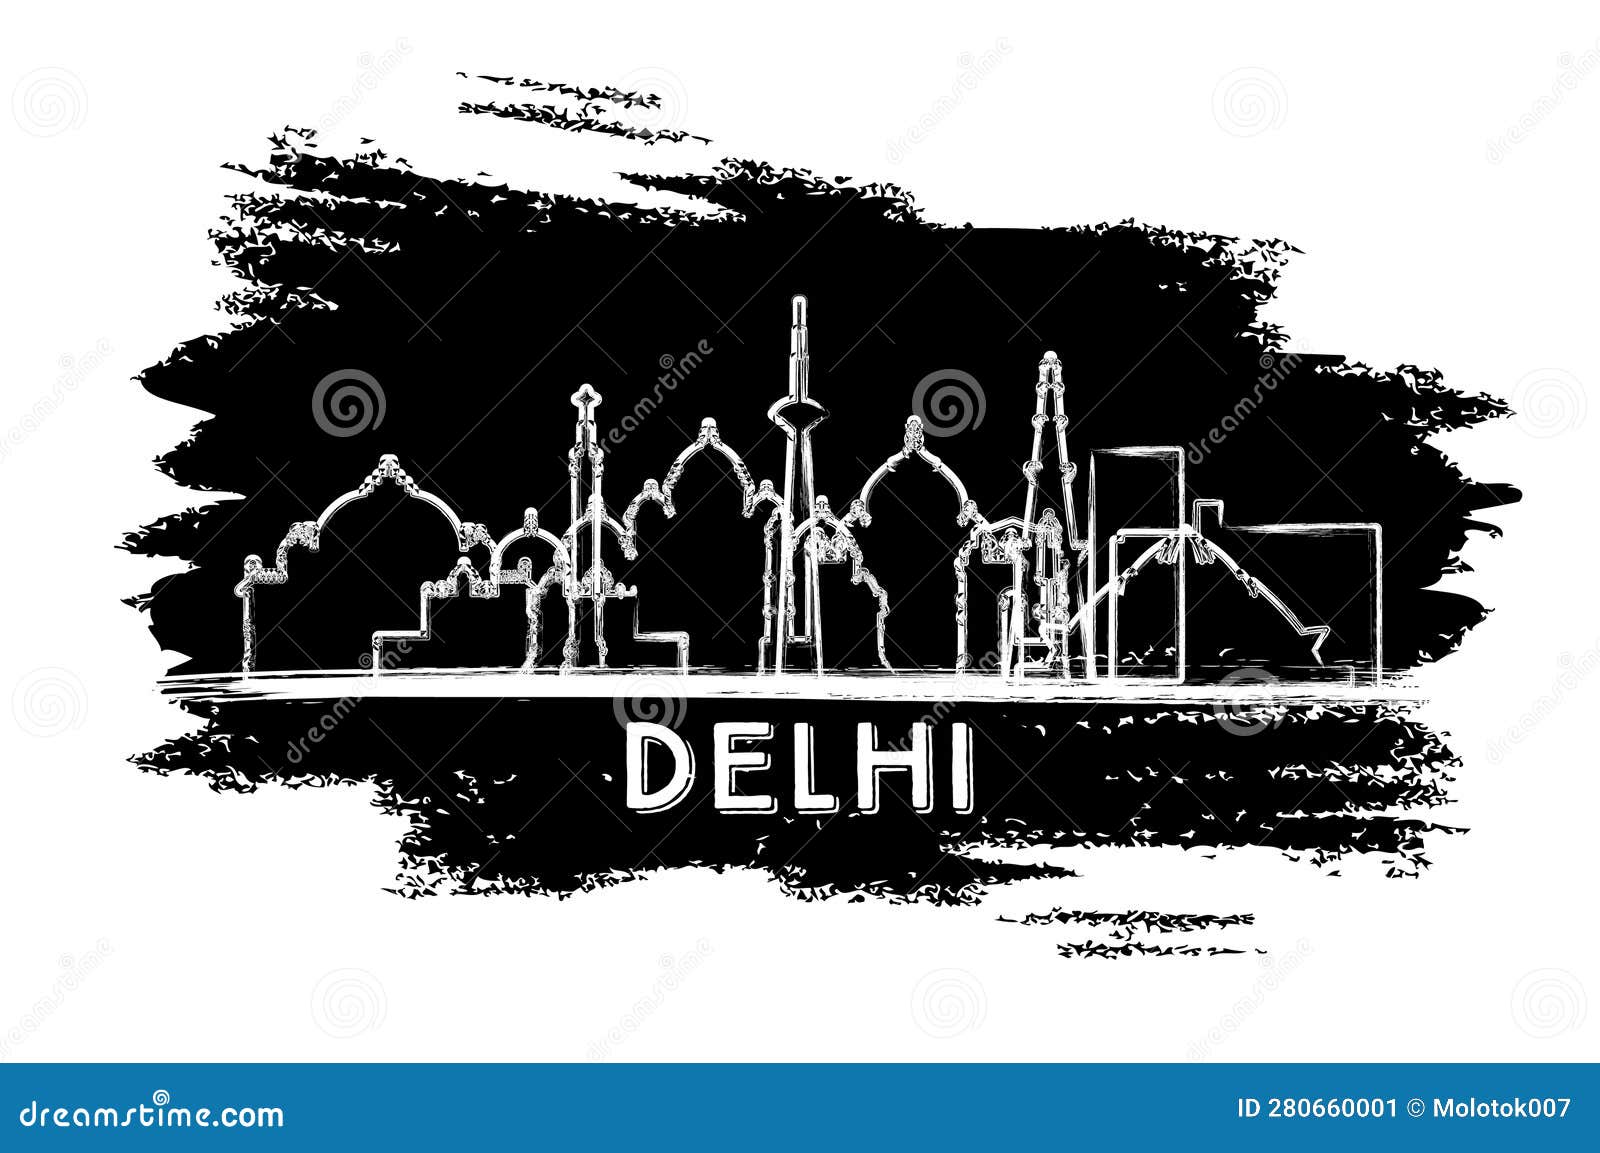 delhi india city skyline silhouette hand drawn sketch business travel tourism concept modern architecture vector 280660001